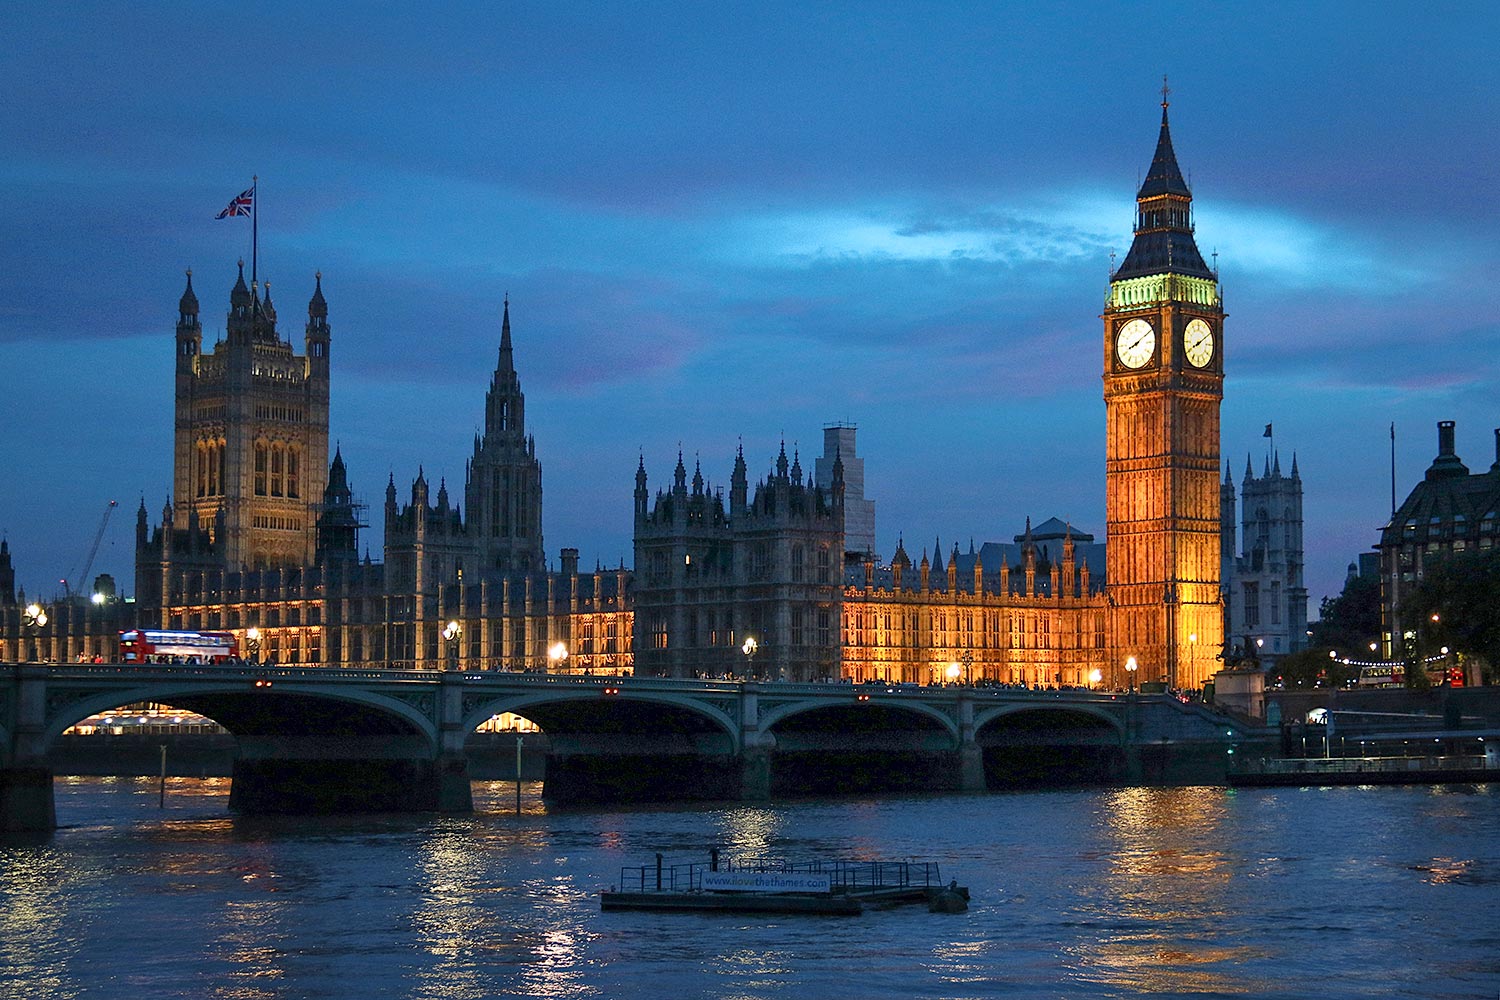 Visites guidées à Londres, Parlement de nuit, Londres, Angleterre / Houses of Parliament by night, London, England, UK.